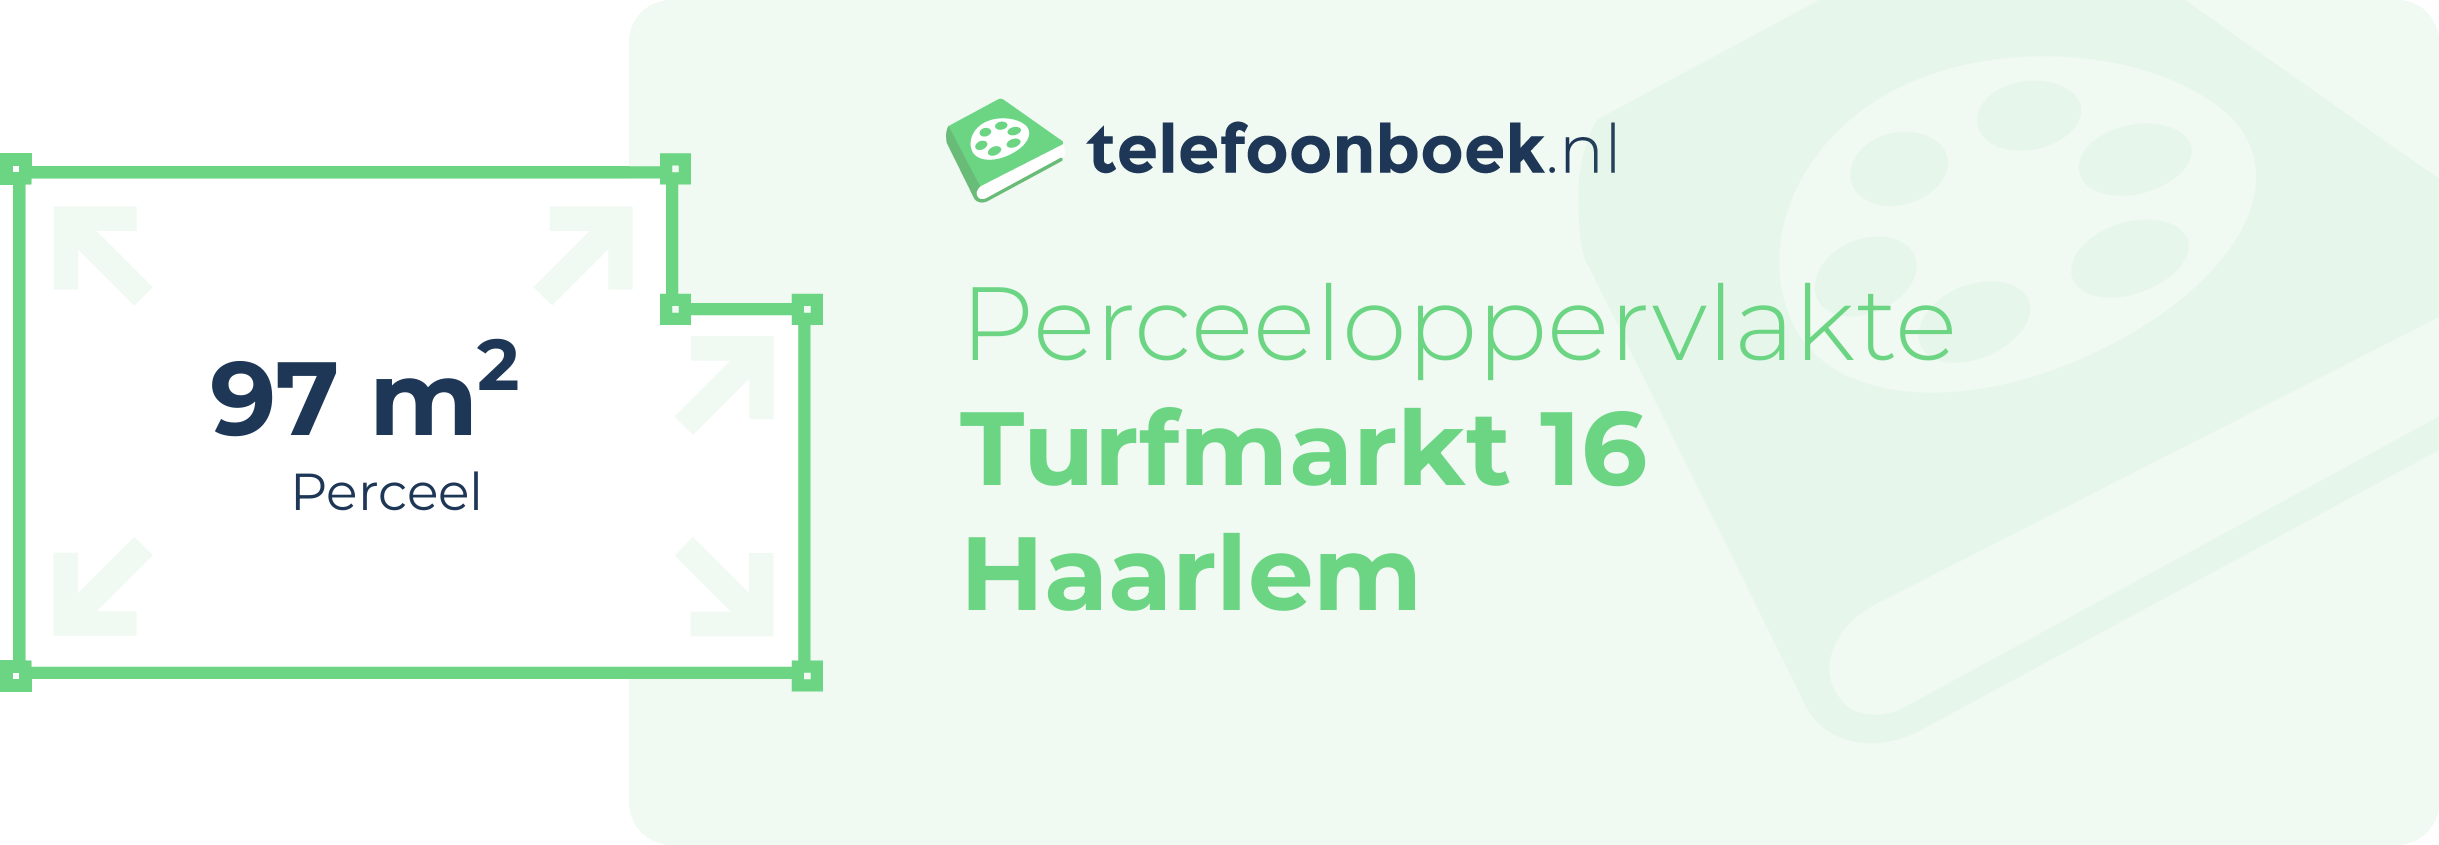 Perceeloppervlakte Turfmarkt 16 Haarlem